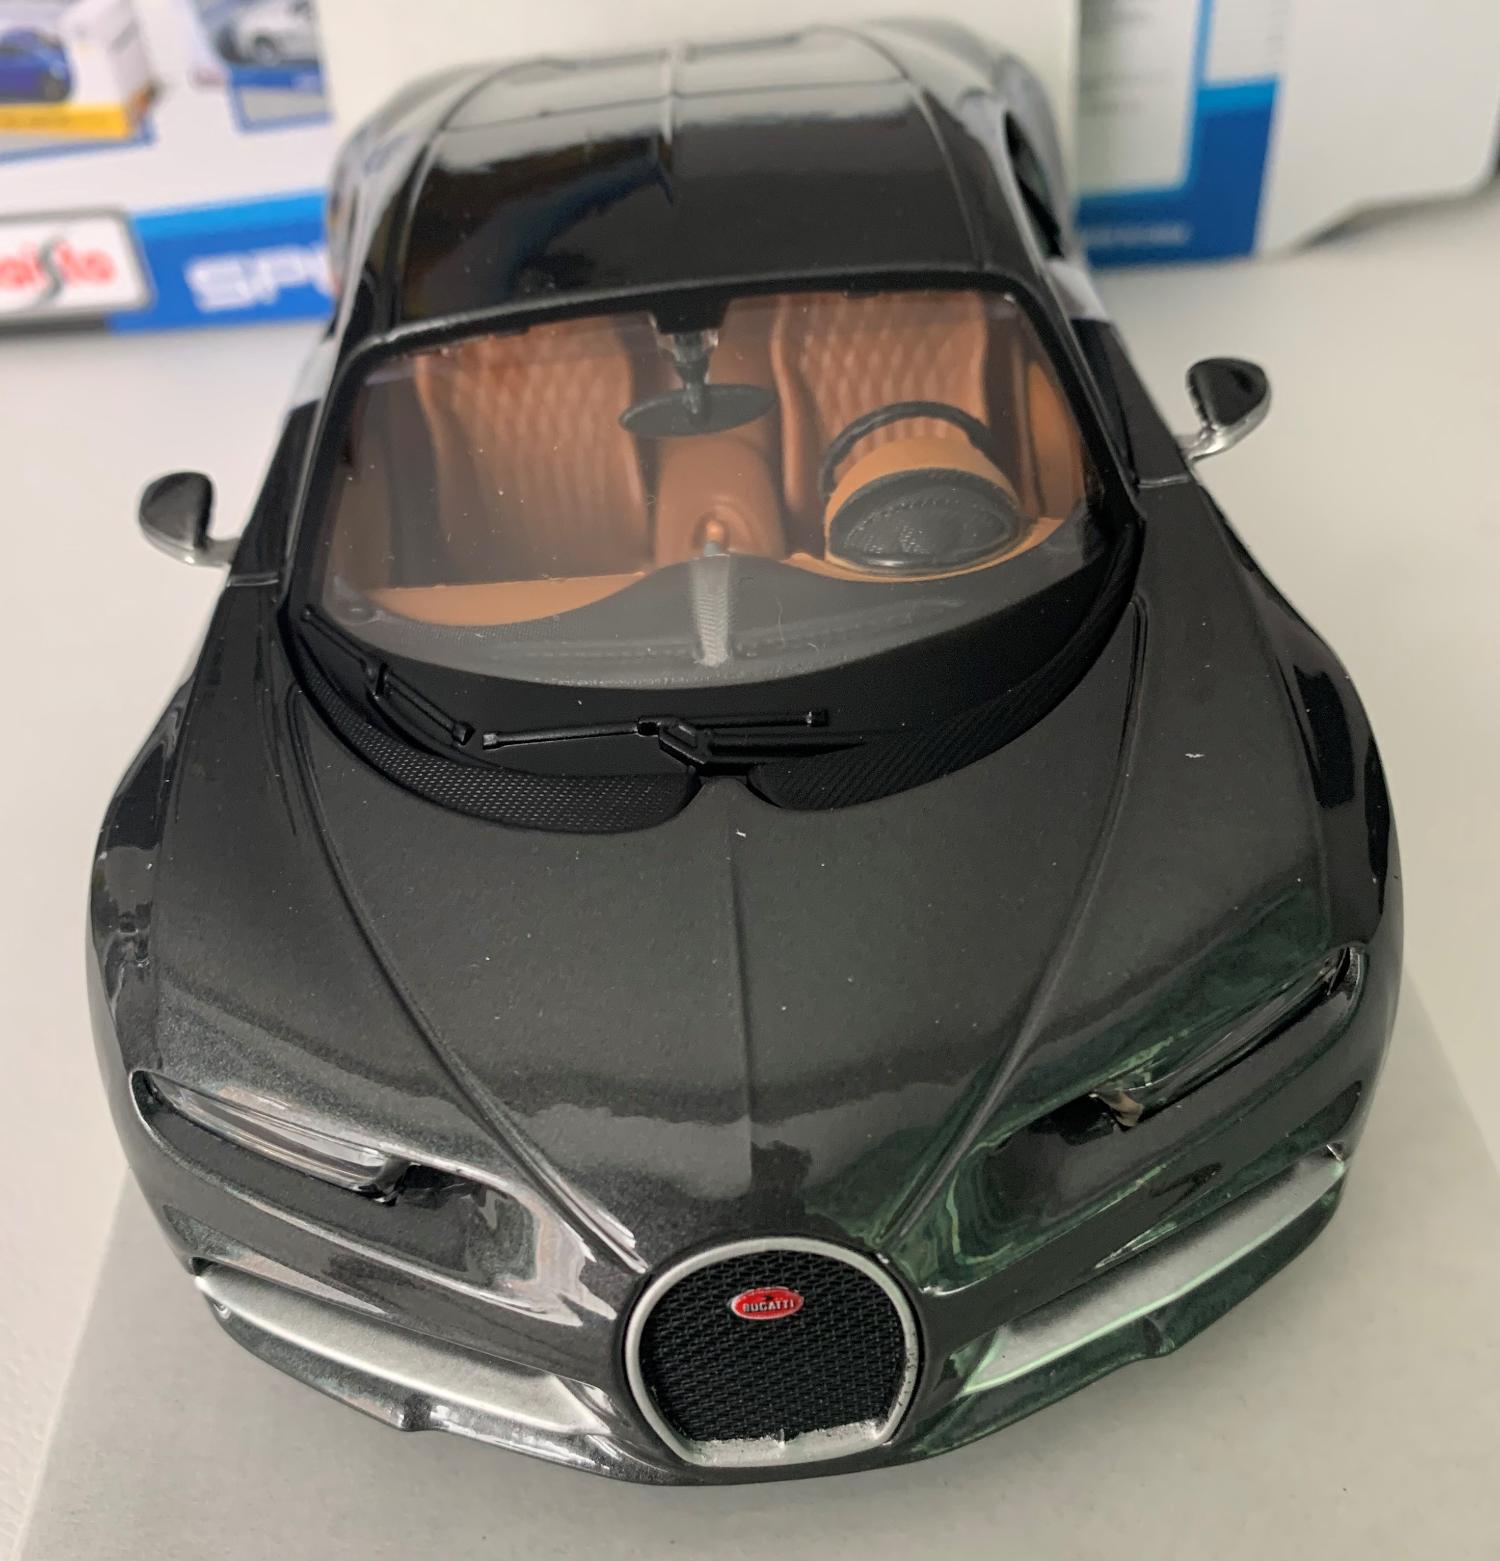 Bugatti Chiron in metallic grey 1:24 scale model from Maisto